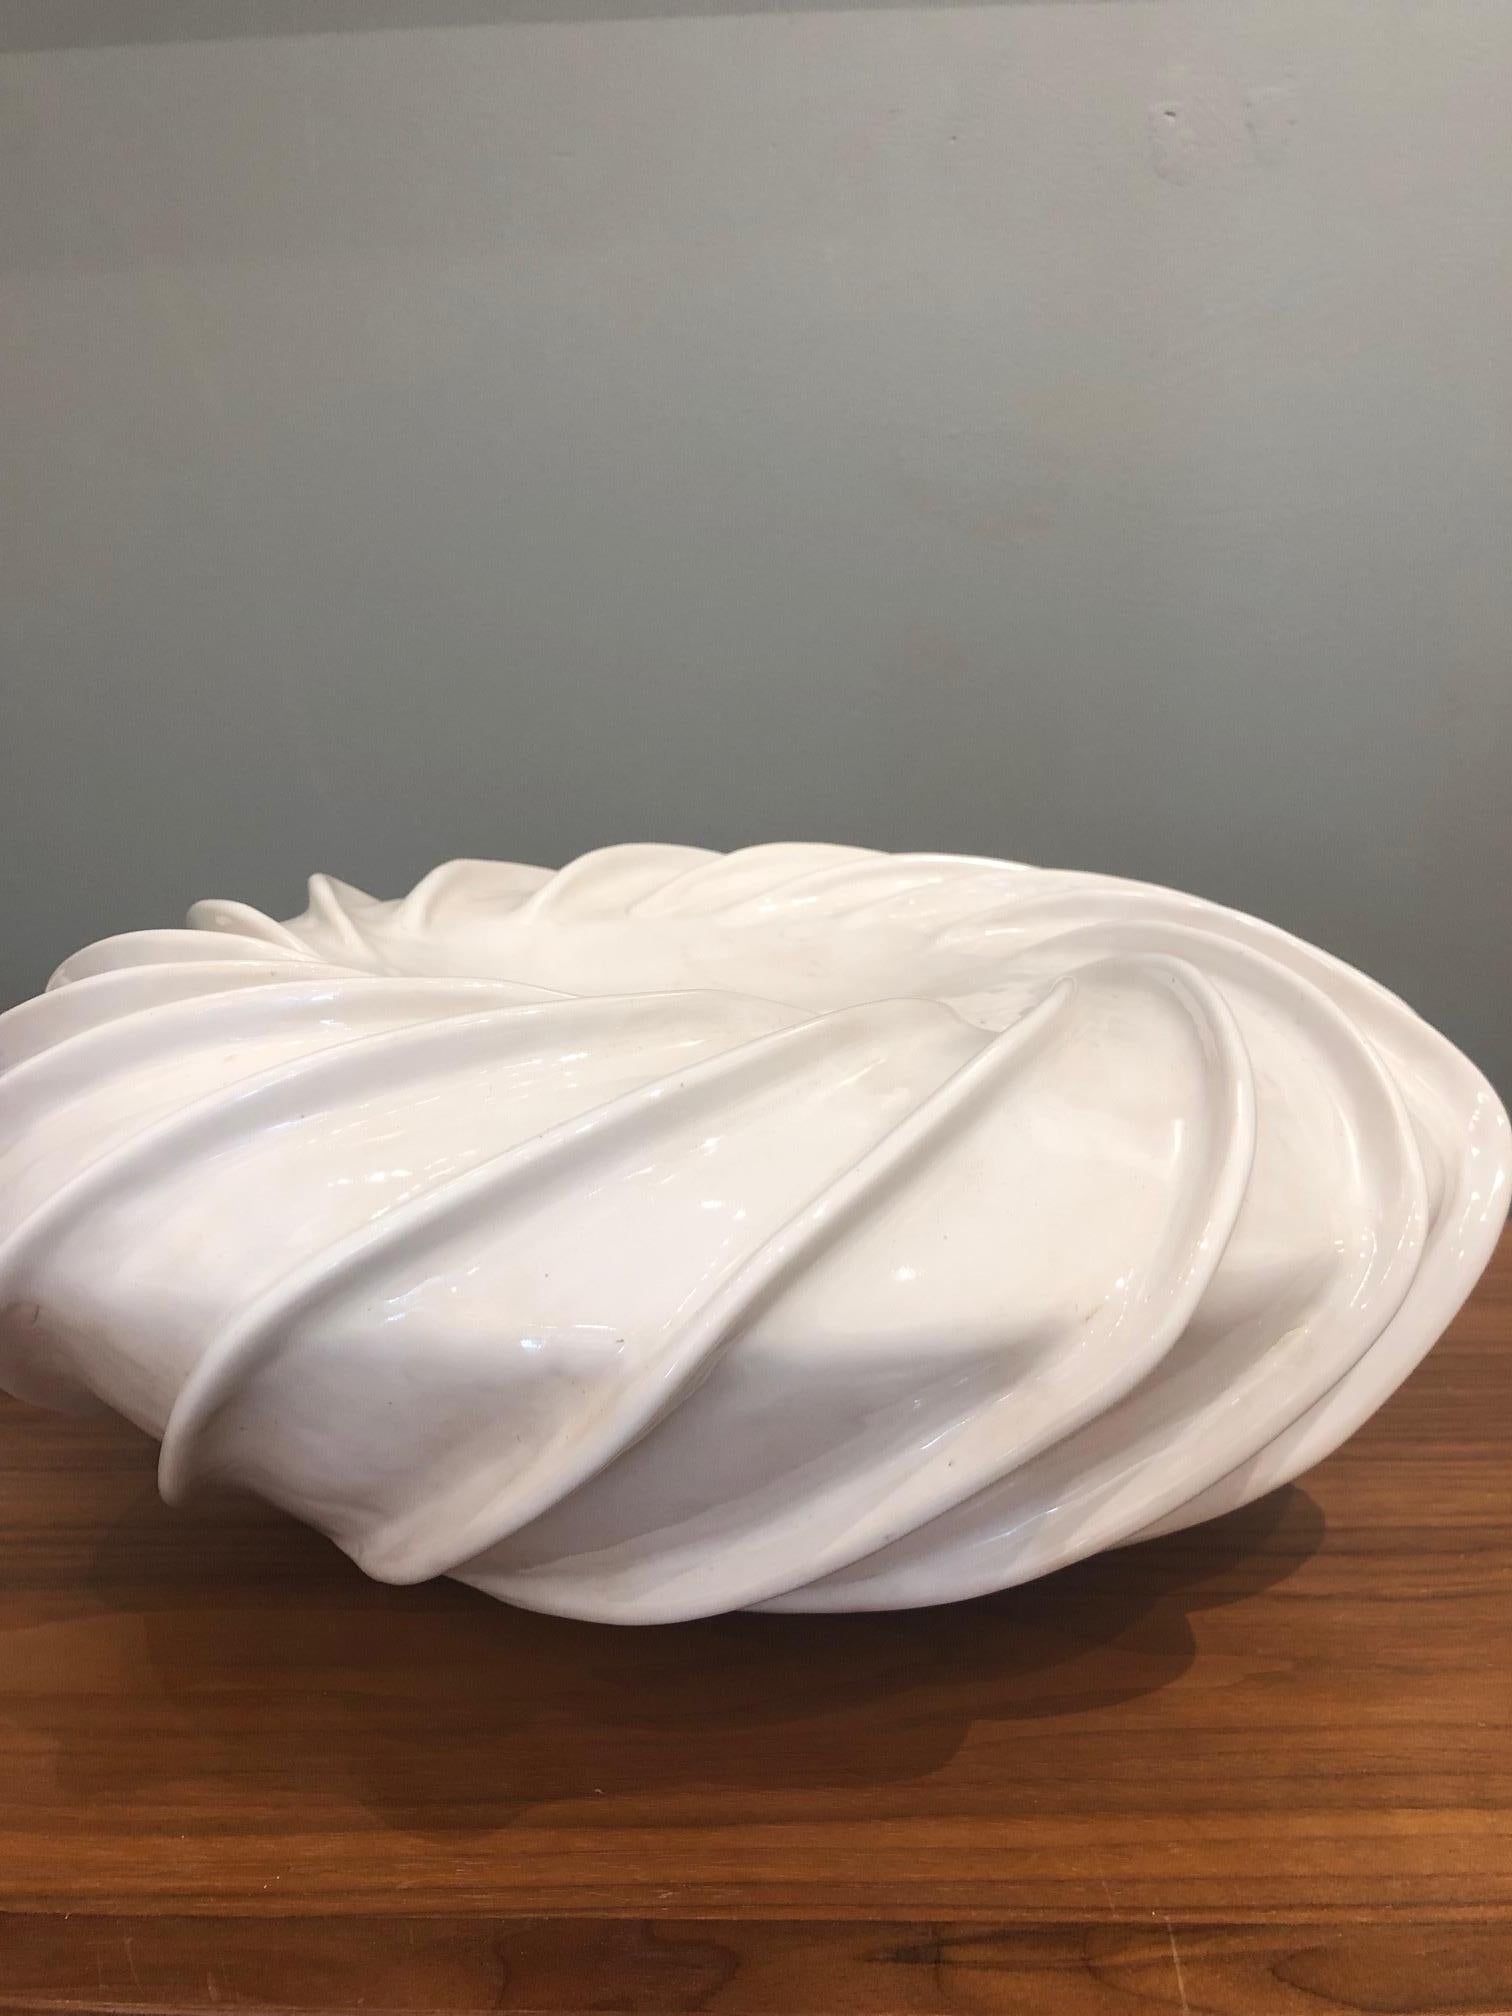 Jane B. Grimm Abstract Sculpture - Swirl: Bowl  / ceramic sculpture white glazed